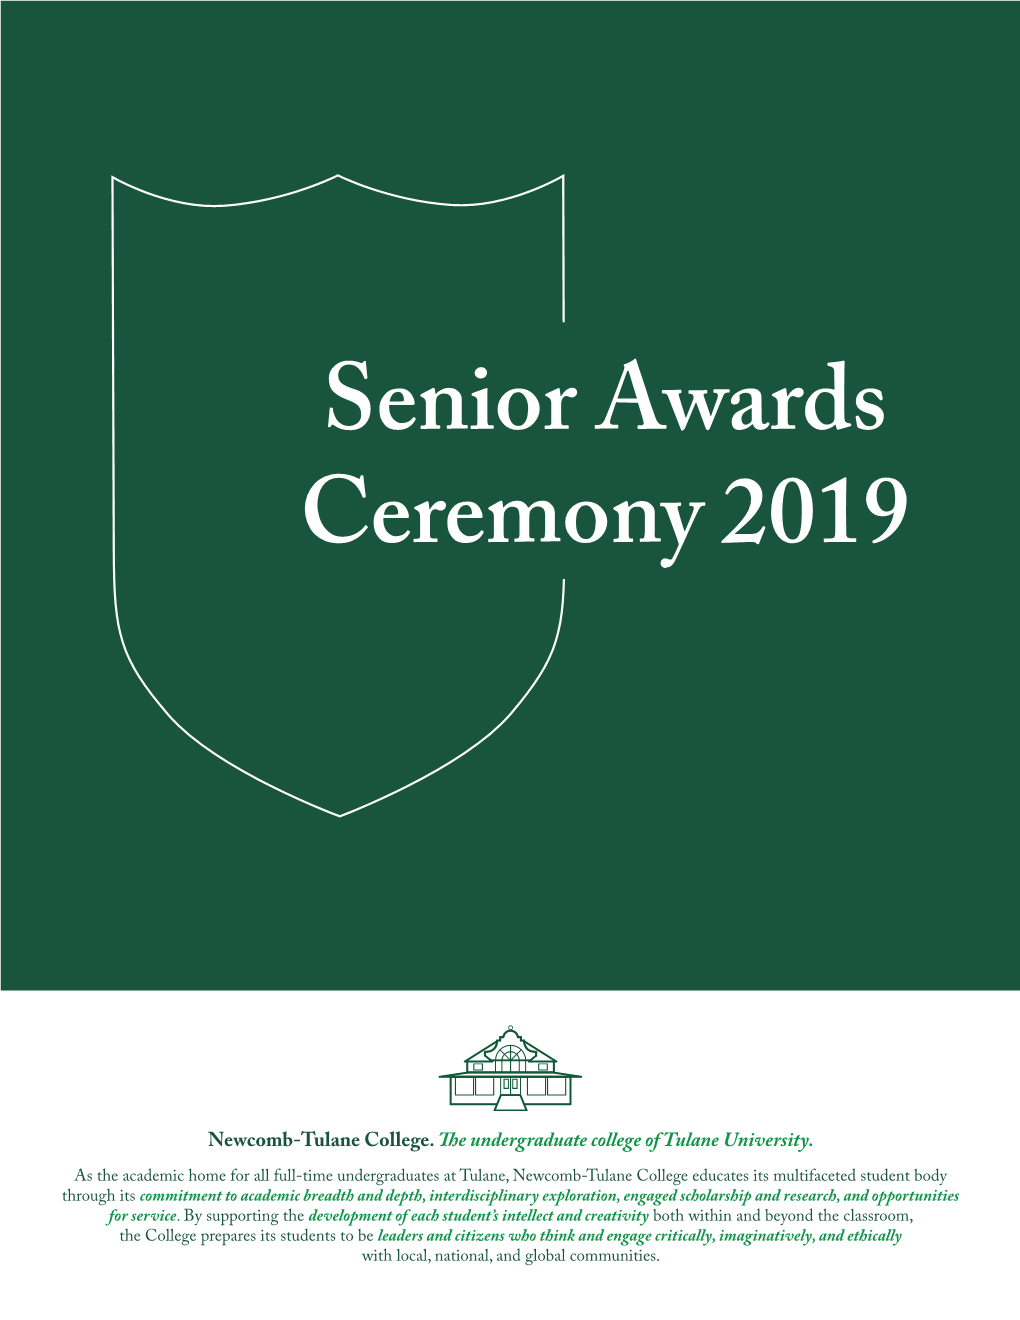 Senior Awards Ceremony 2019